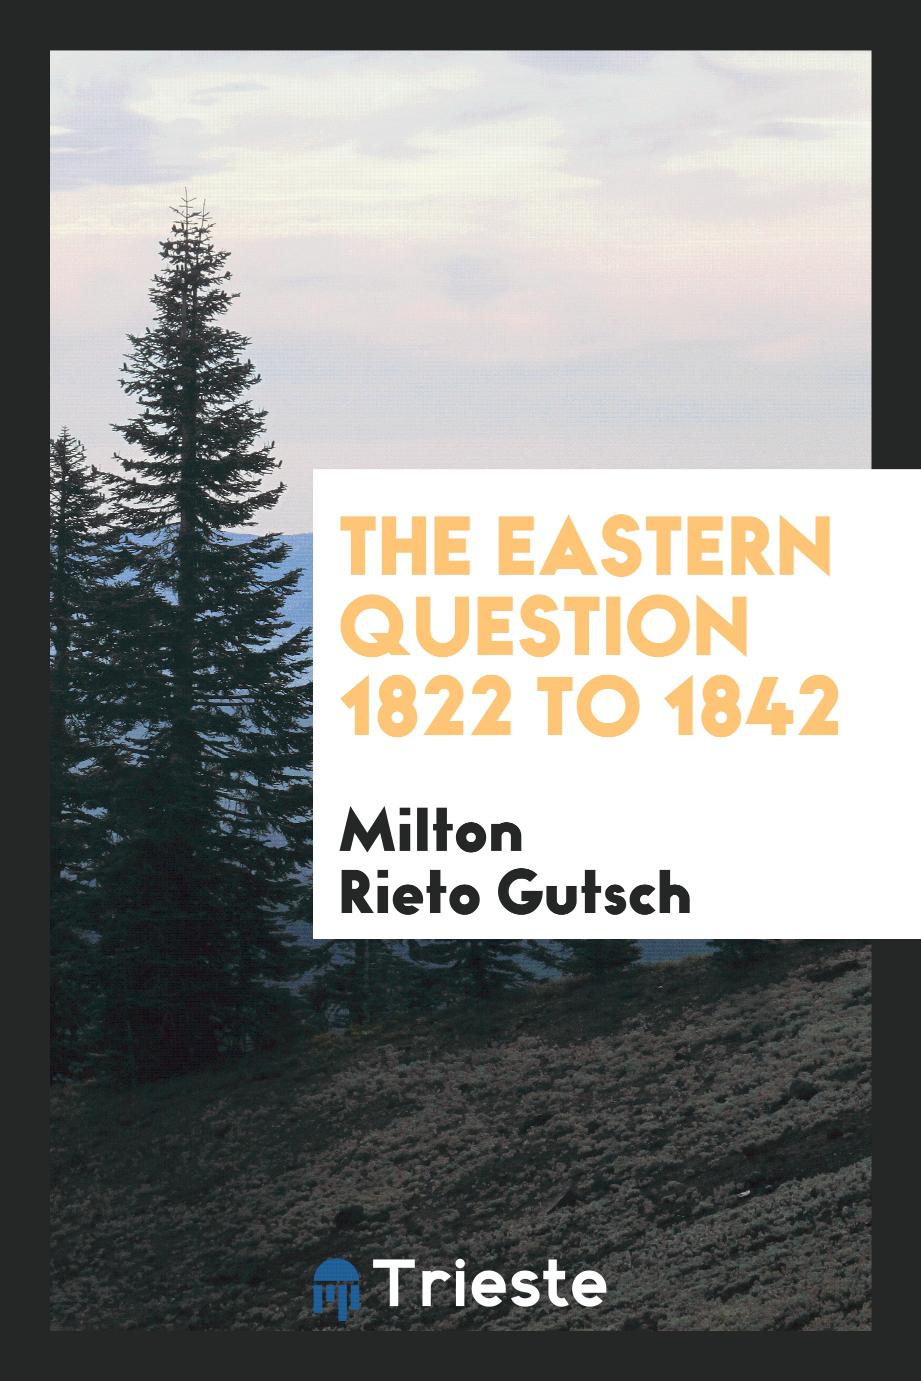 Milton Rieto Gutsch - The Eastern Question 1822 to 1842